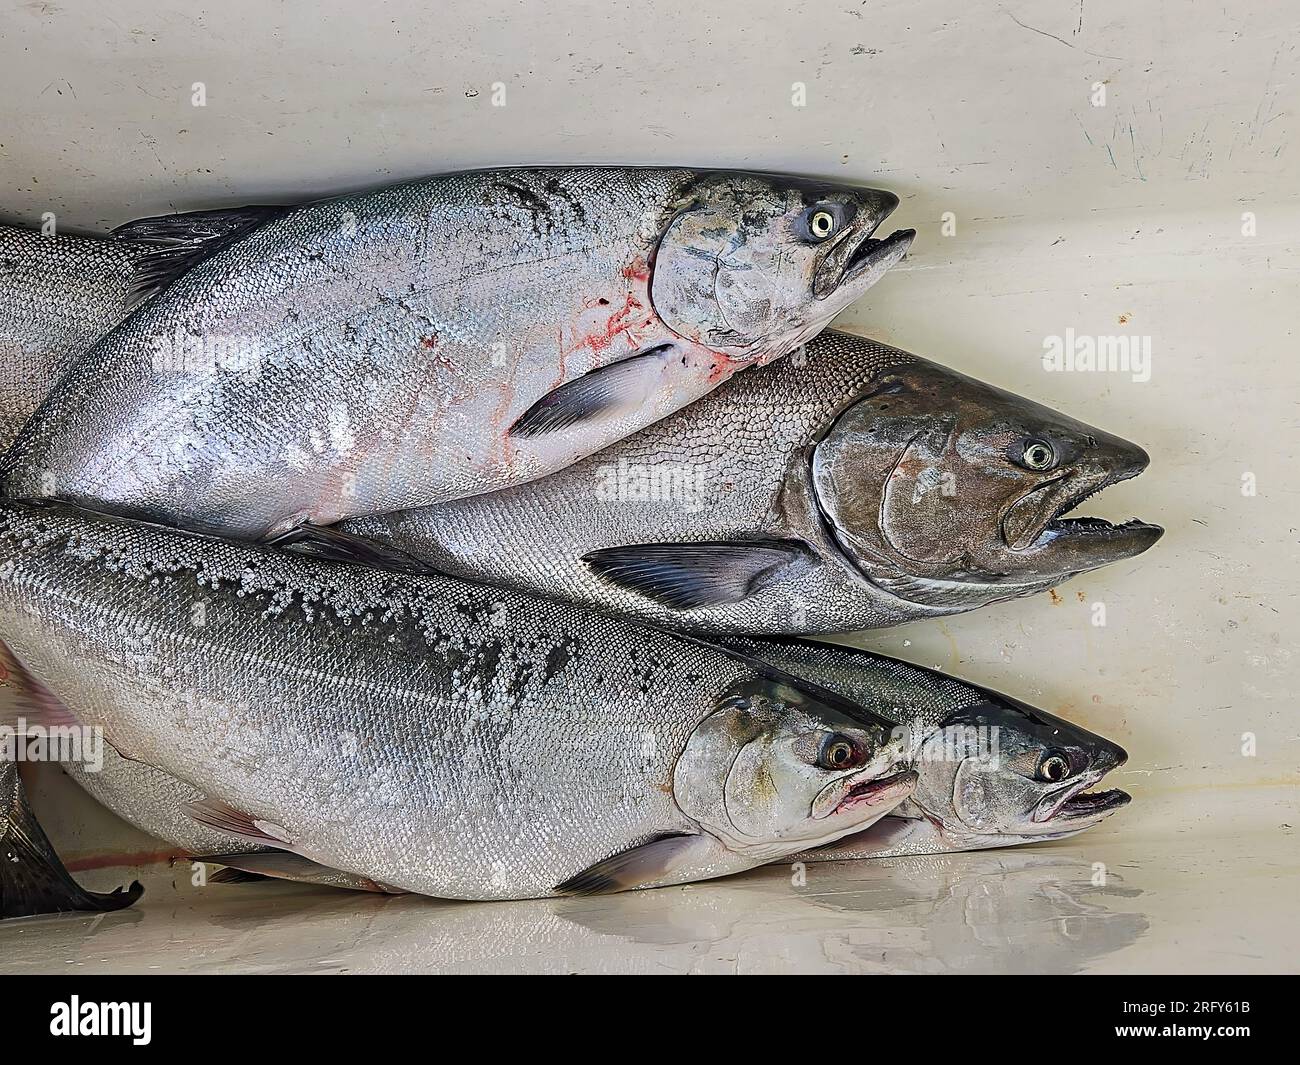 https://c8.alamy.com/comp/2RFY61B/four-dead-salmon-in-a-cream-colored-fish-cooler-2RFY61B.jpg